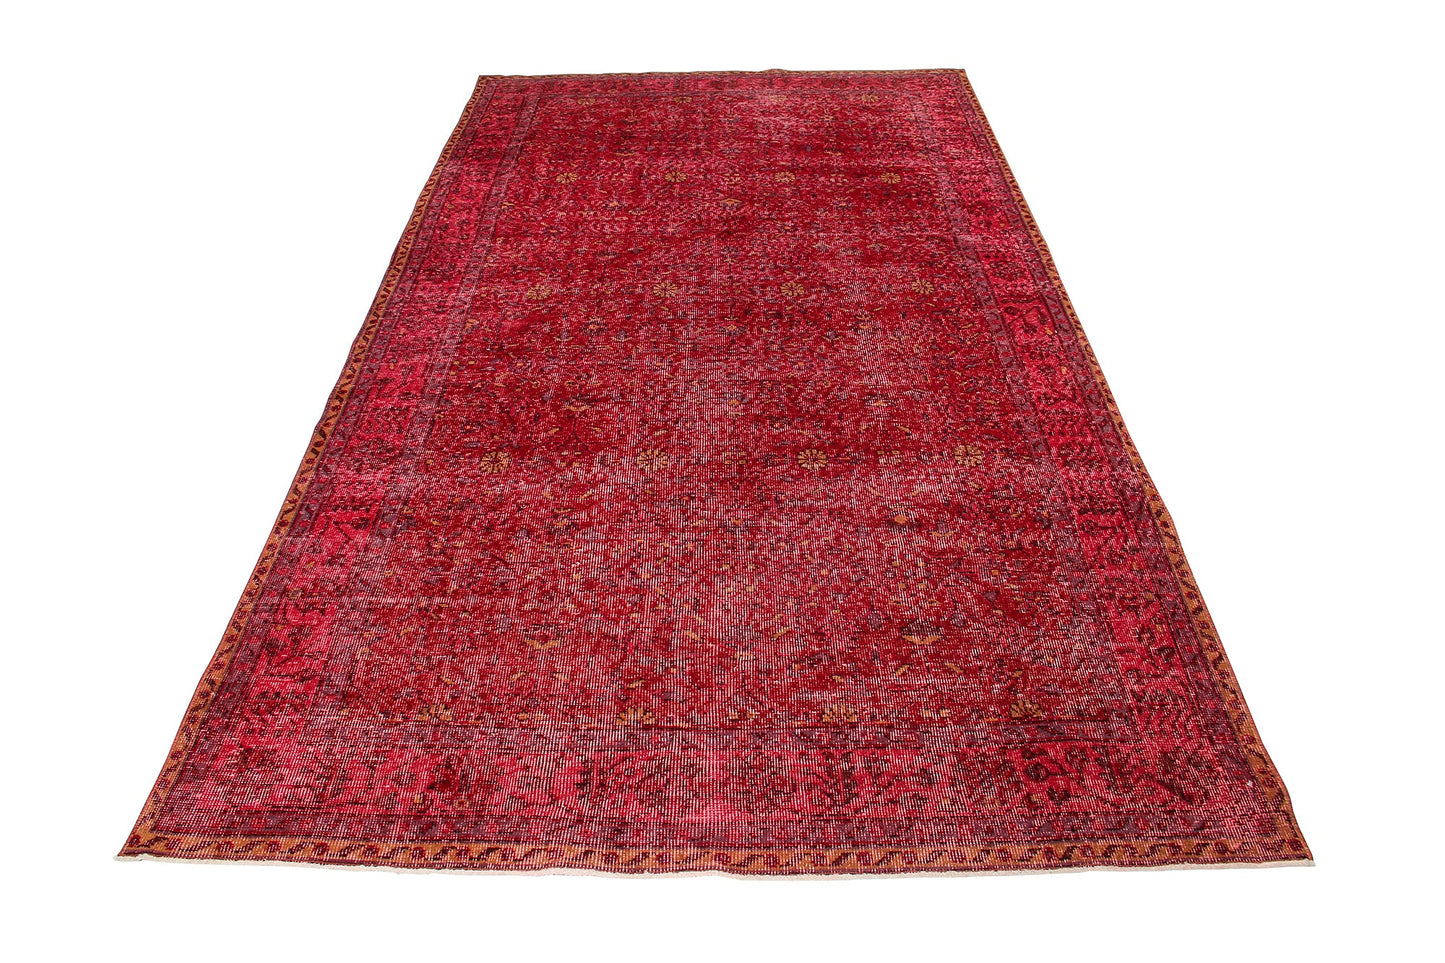 Vintage Wool Handmade Turkish Red Carpet product image #27556268802218